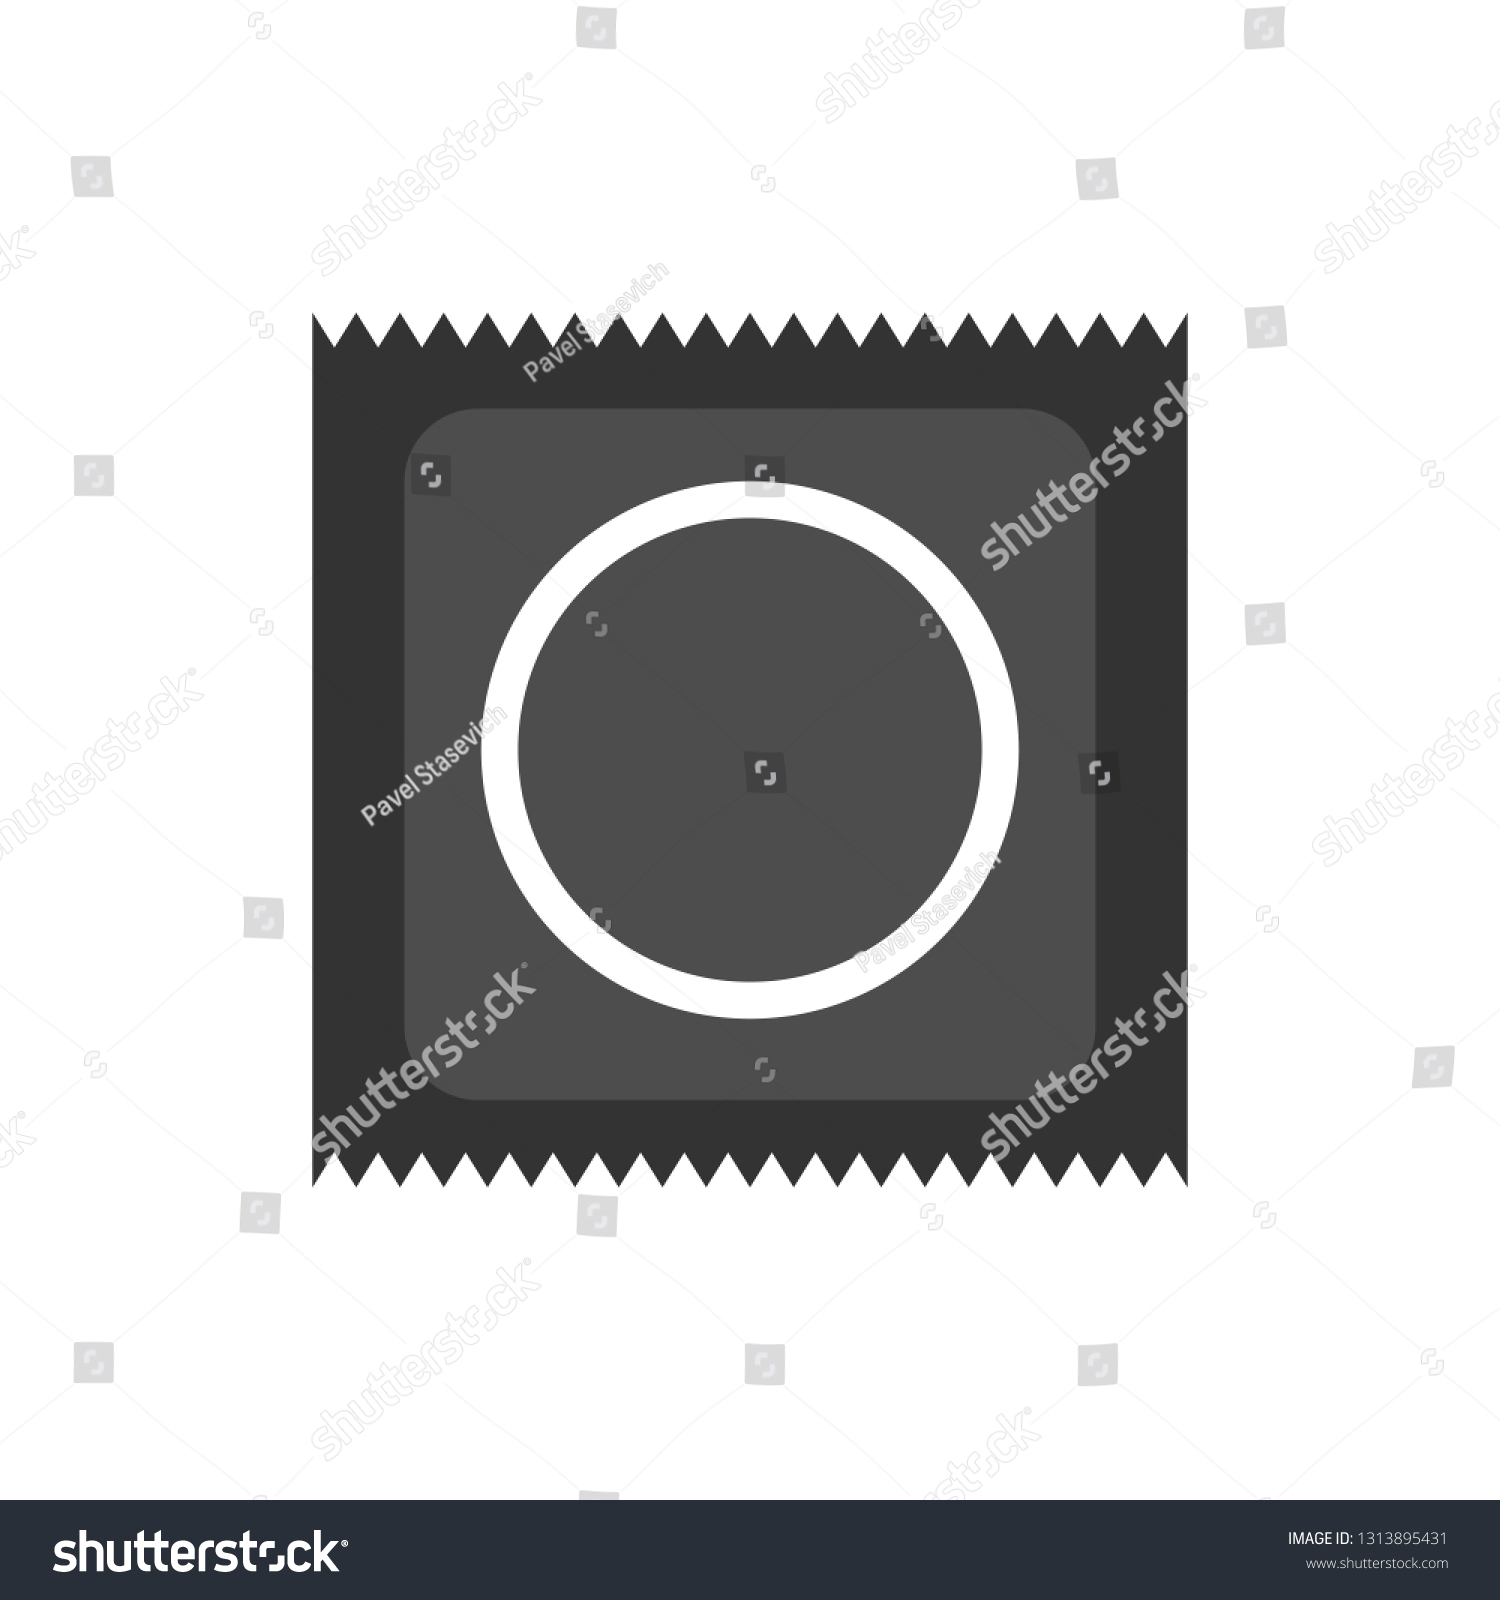 Condom Contraceptive Rubber Sexual Icon Vector Stock Vector Royalty Free 1313895431 Shutterstock 1827